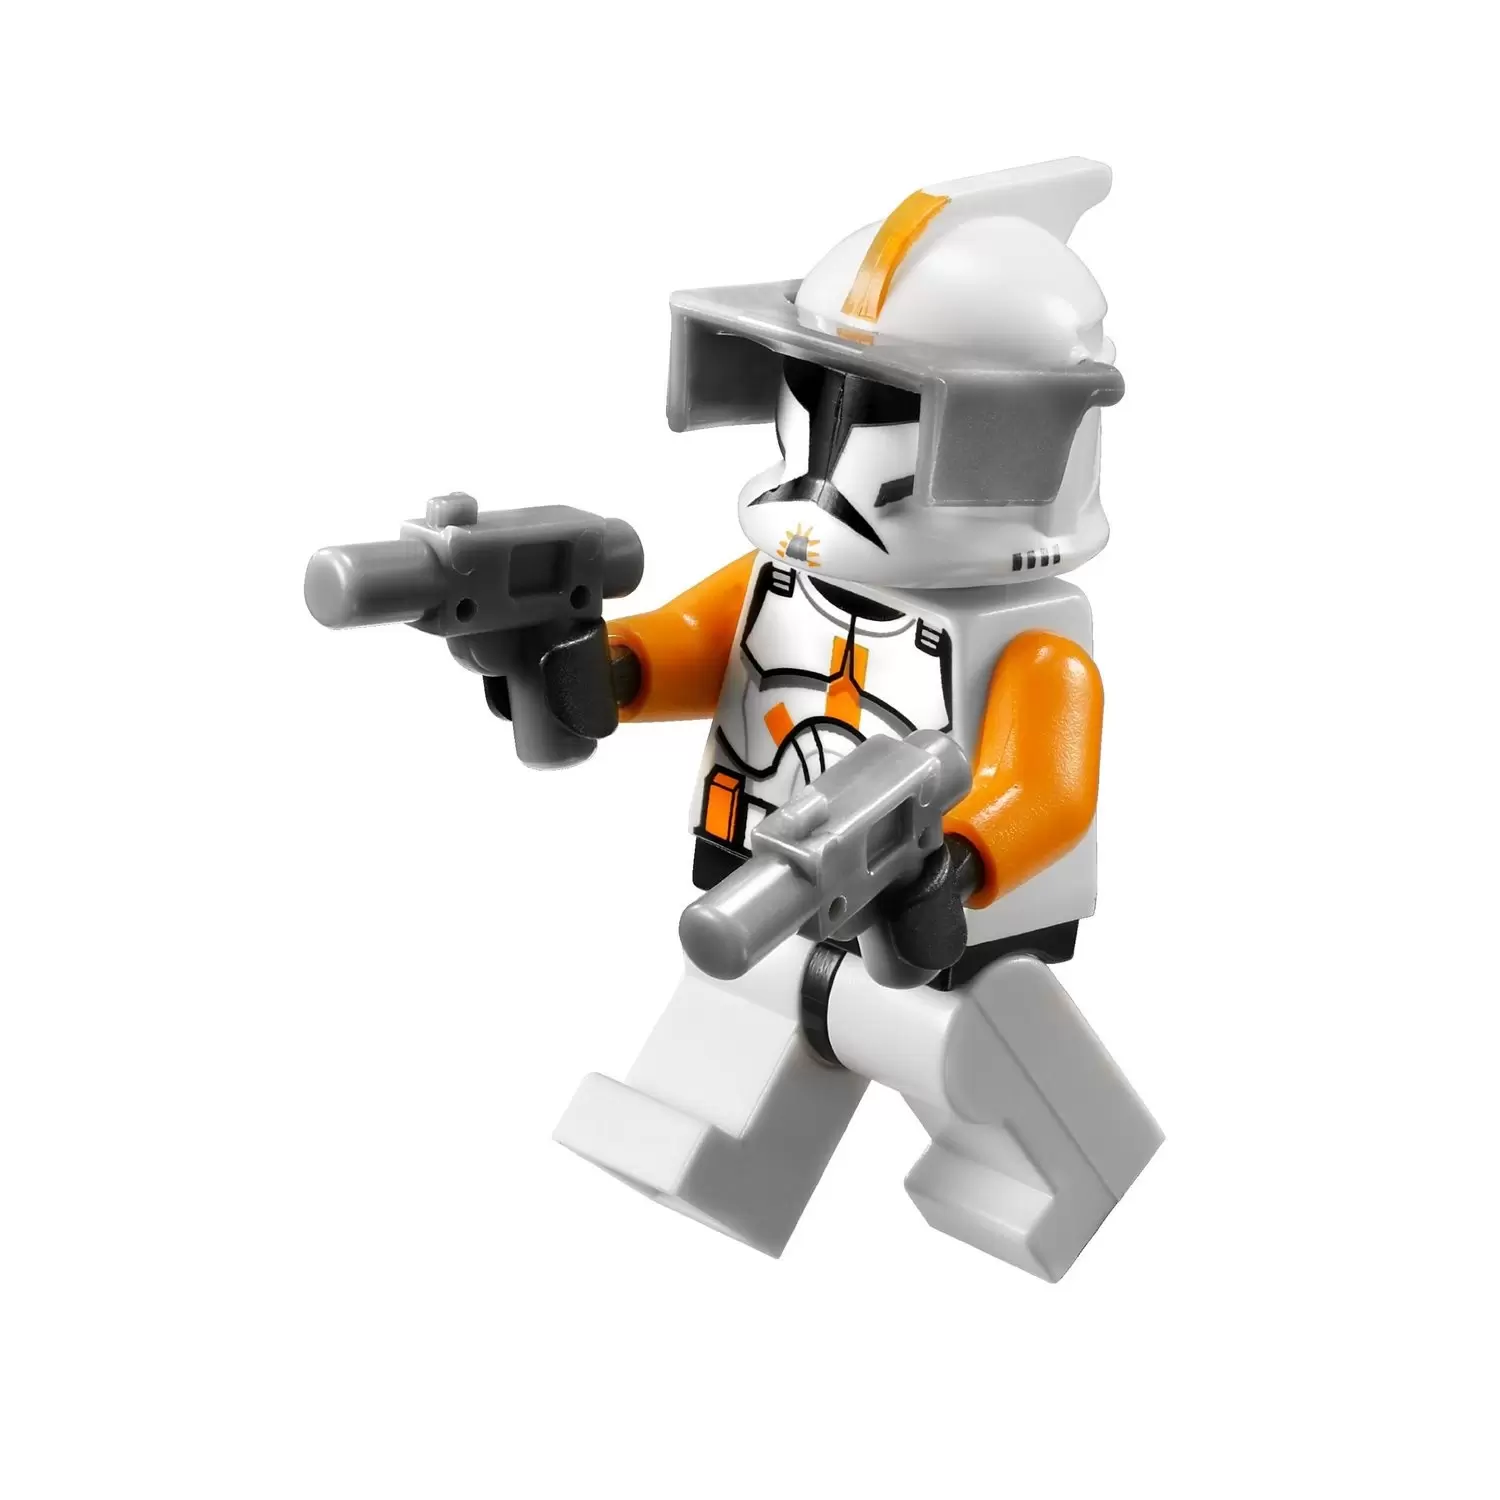 Minifigurines LEGO Star Wars - Commander Cody